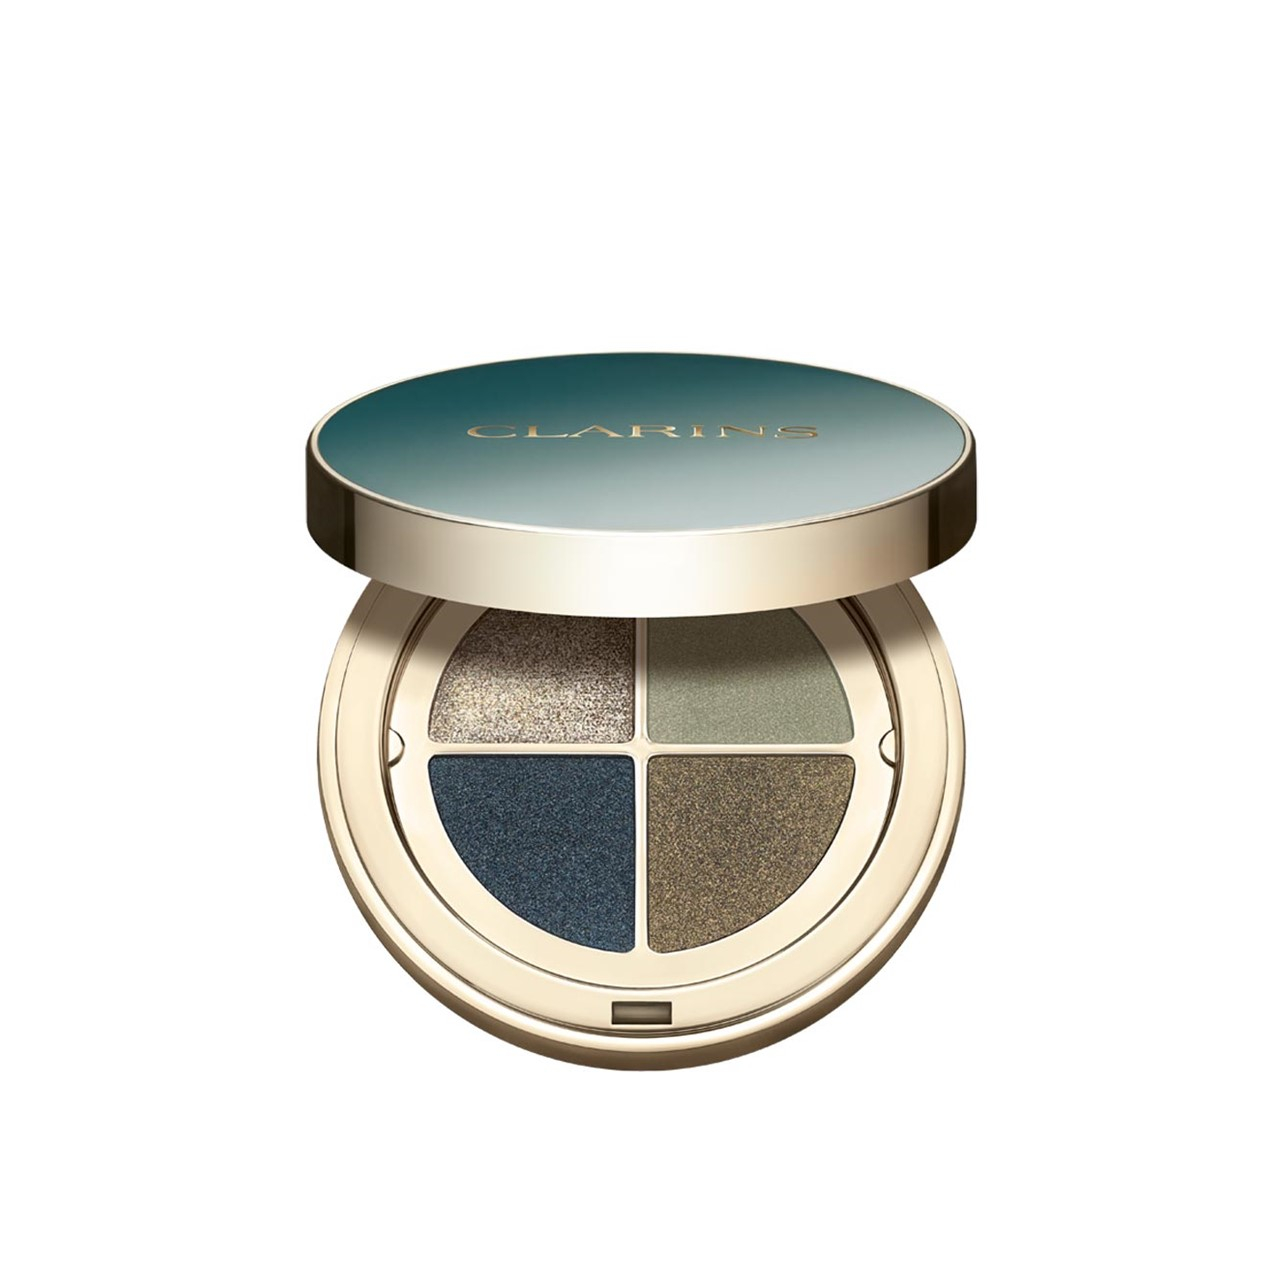 Clarins Ombre 4 Couleurs Eyeshadow Palette 05 Jade Gradation 4.2g (0.15oz)